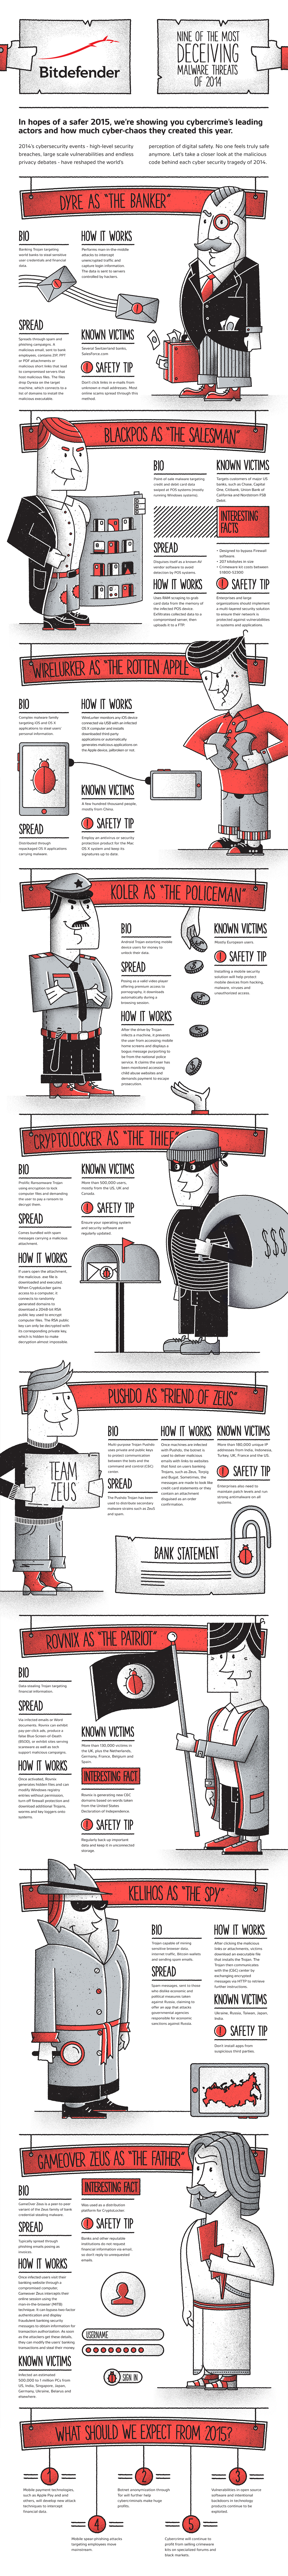 Character infographic design malware virus threat online banker Policeman thief spy